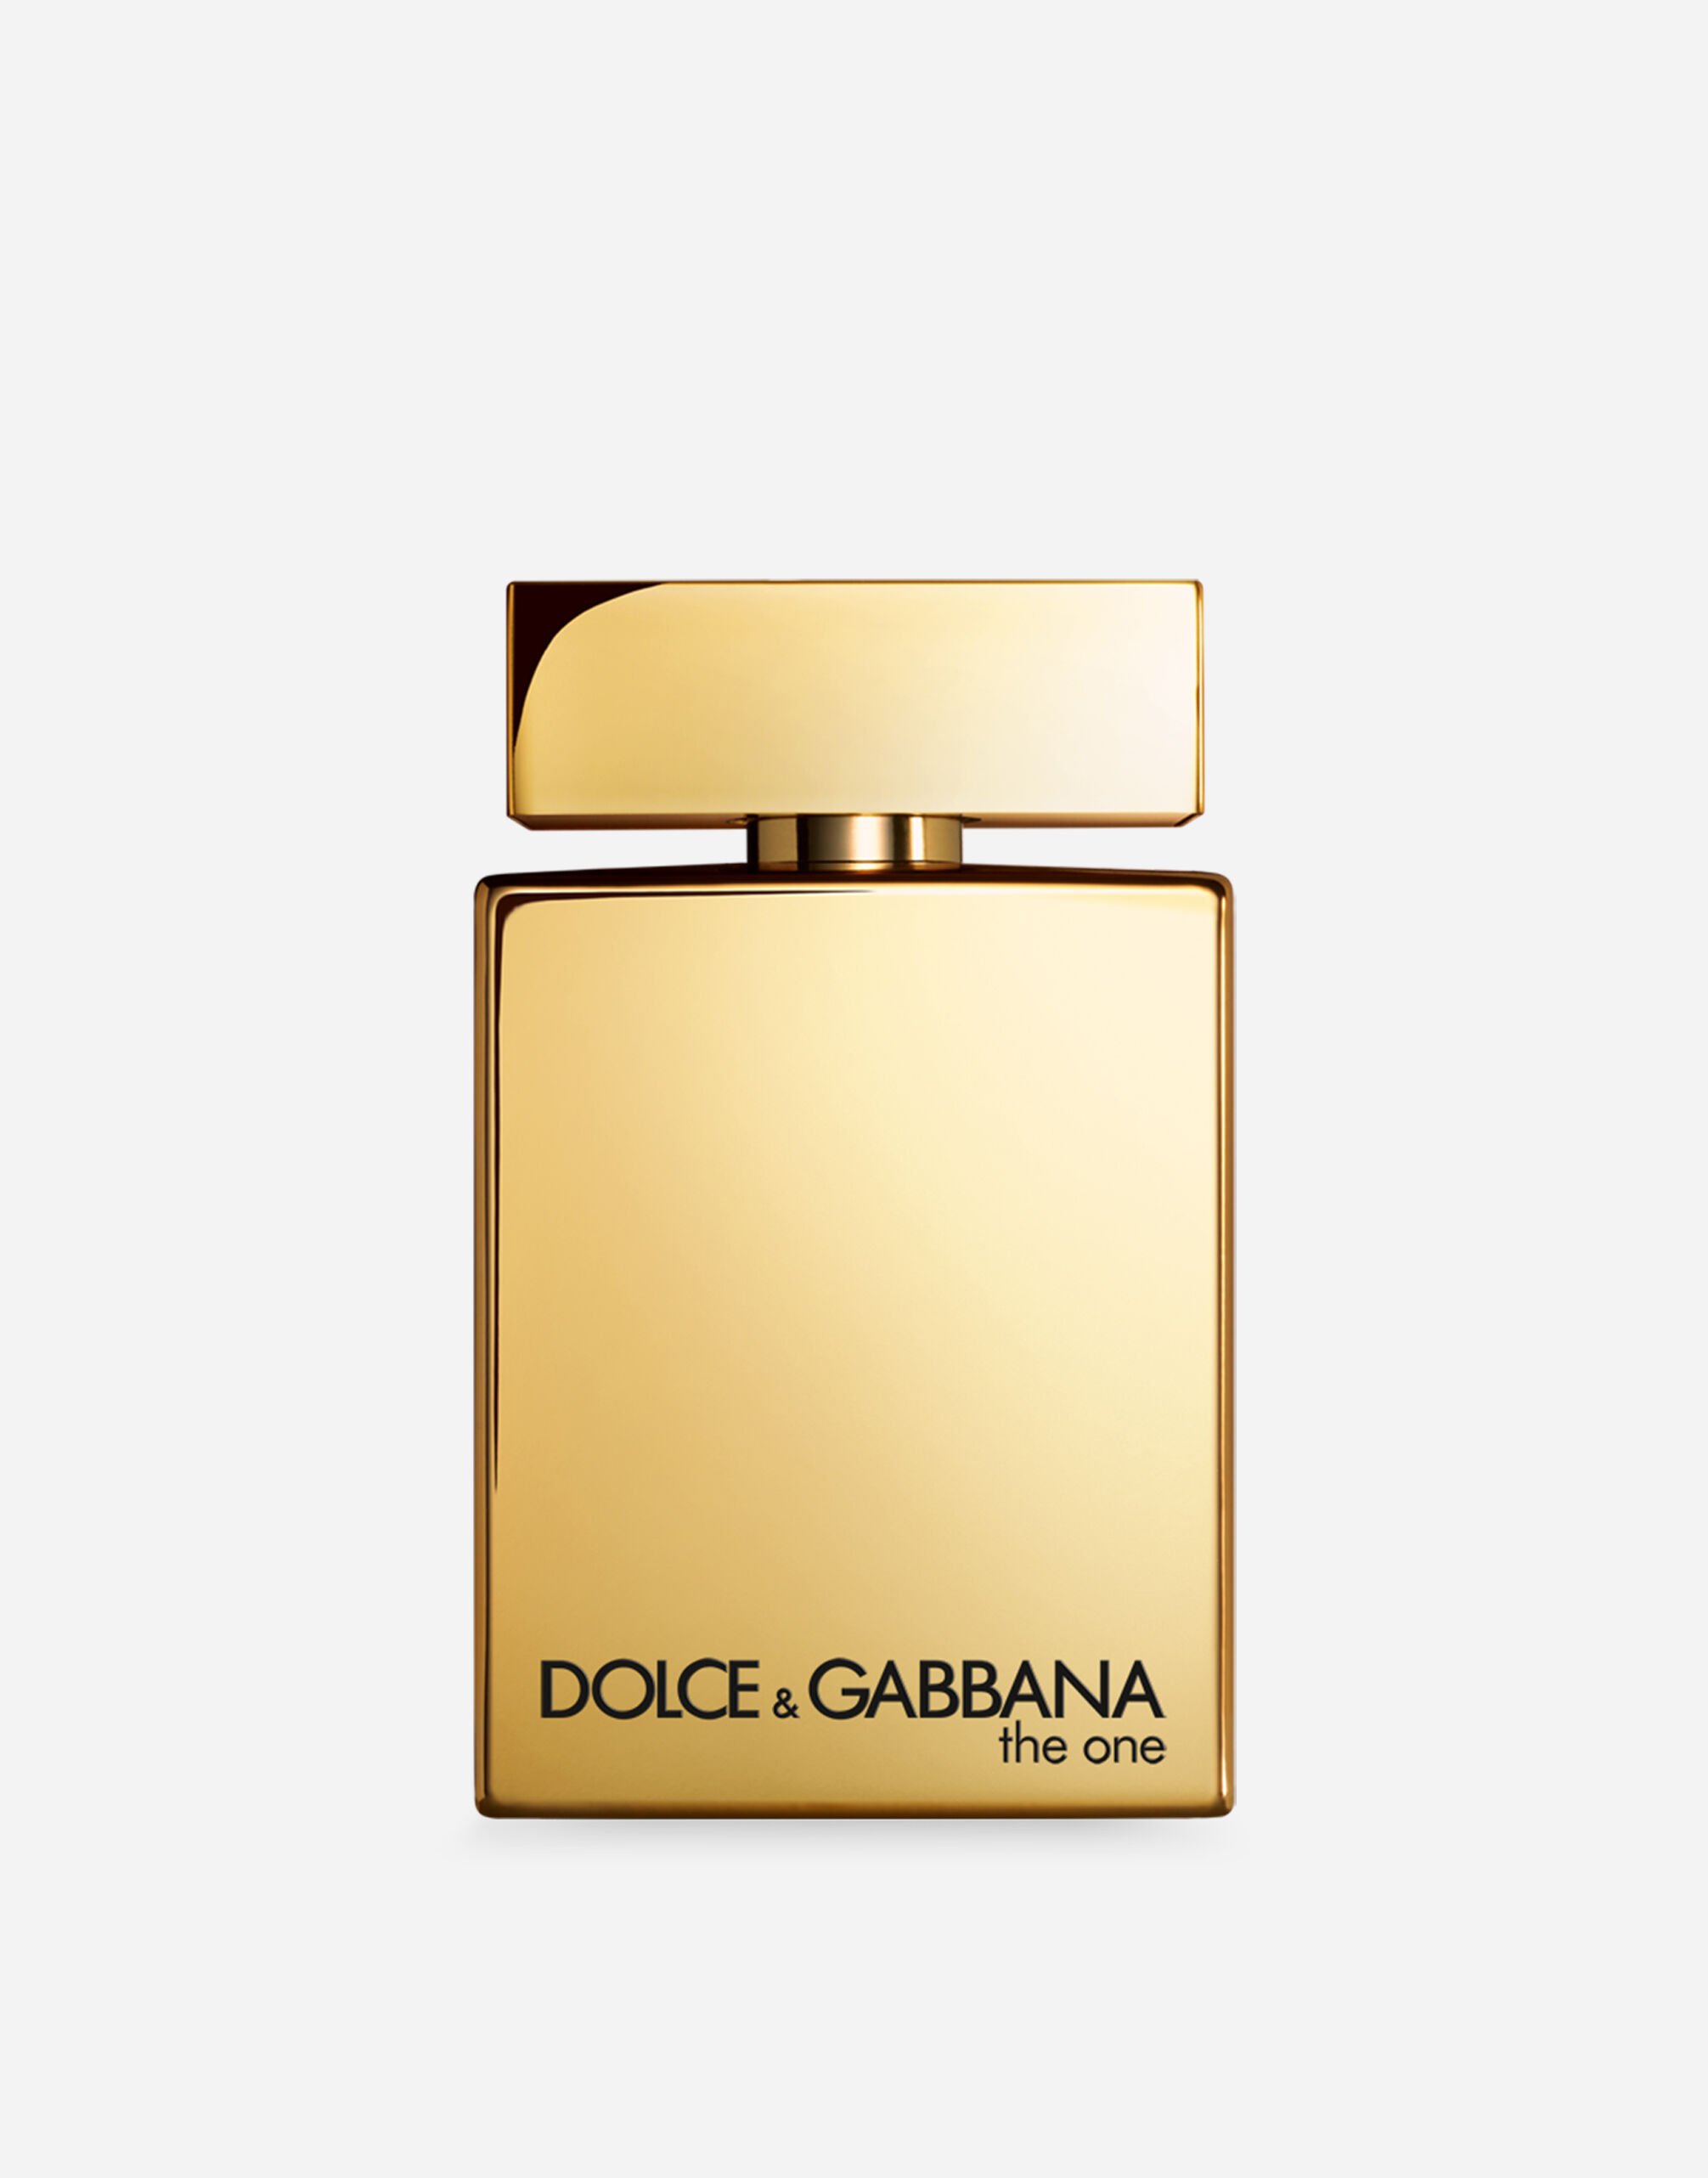 Dolce & Gabbana The One for Men Gold Eau de Parfum Intense - VP6974VP243